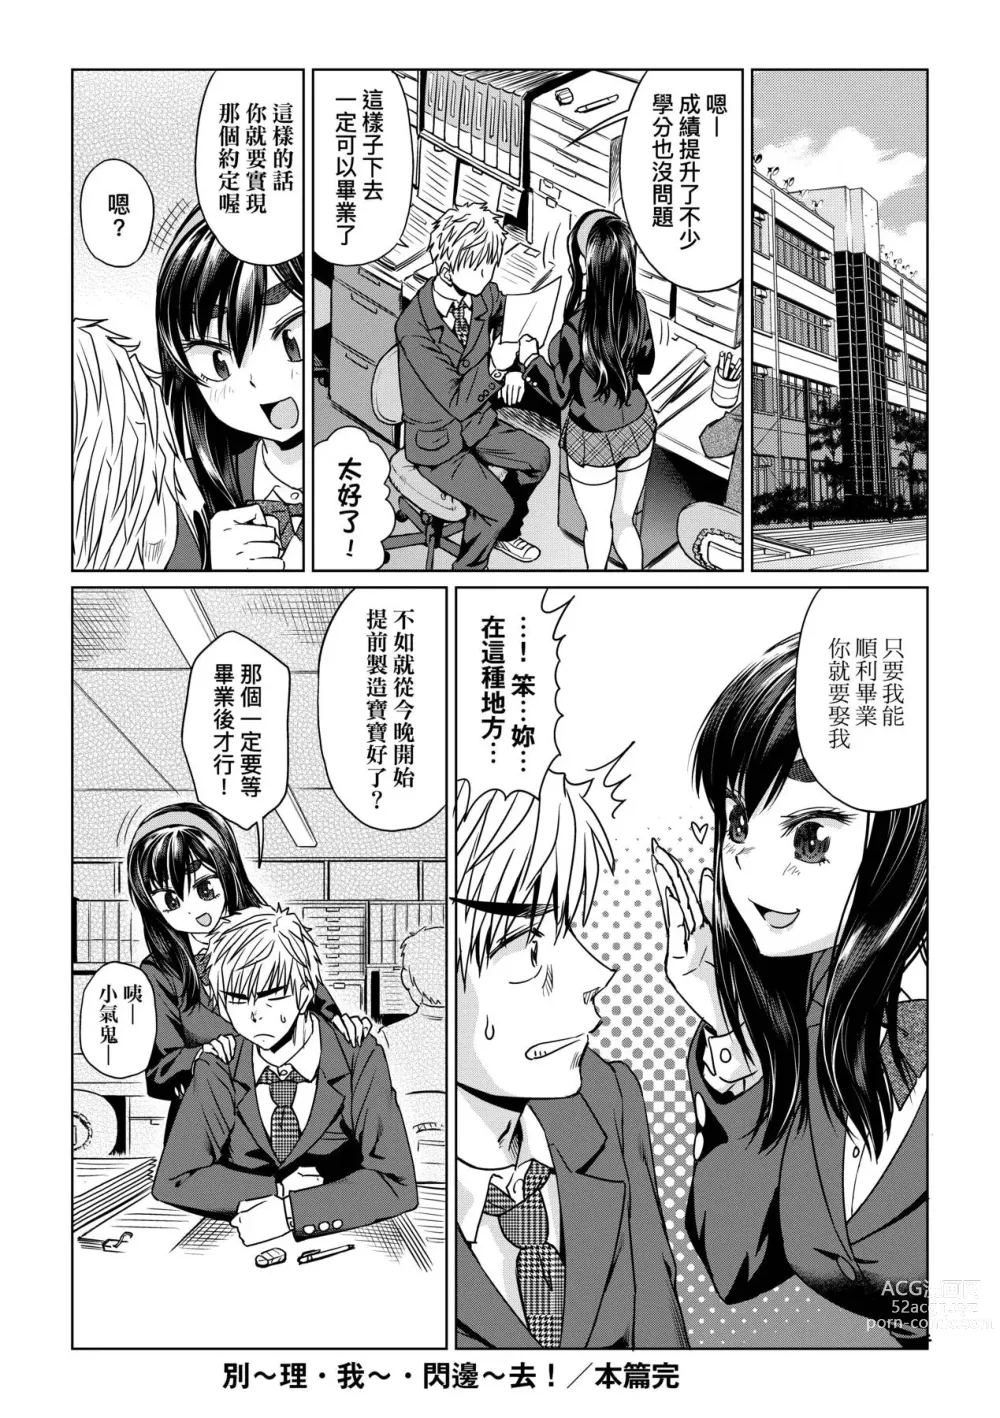 Page 200 of manga 用邪眼的催眠淫力讓學生會百合女子們從處女強制畢業!! (decensored)